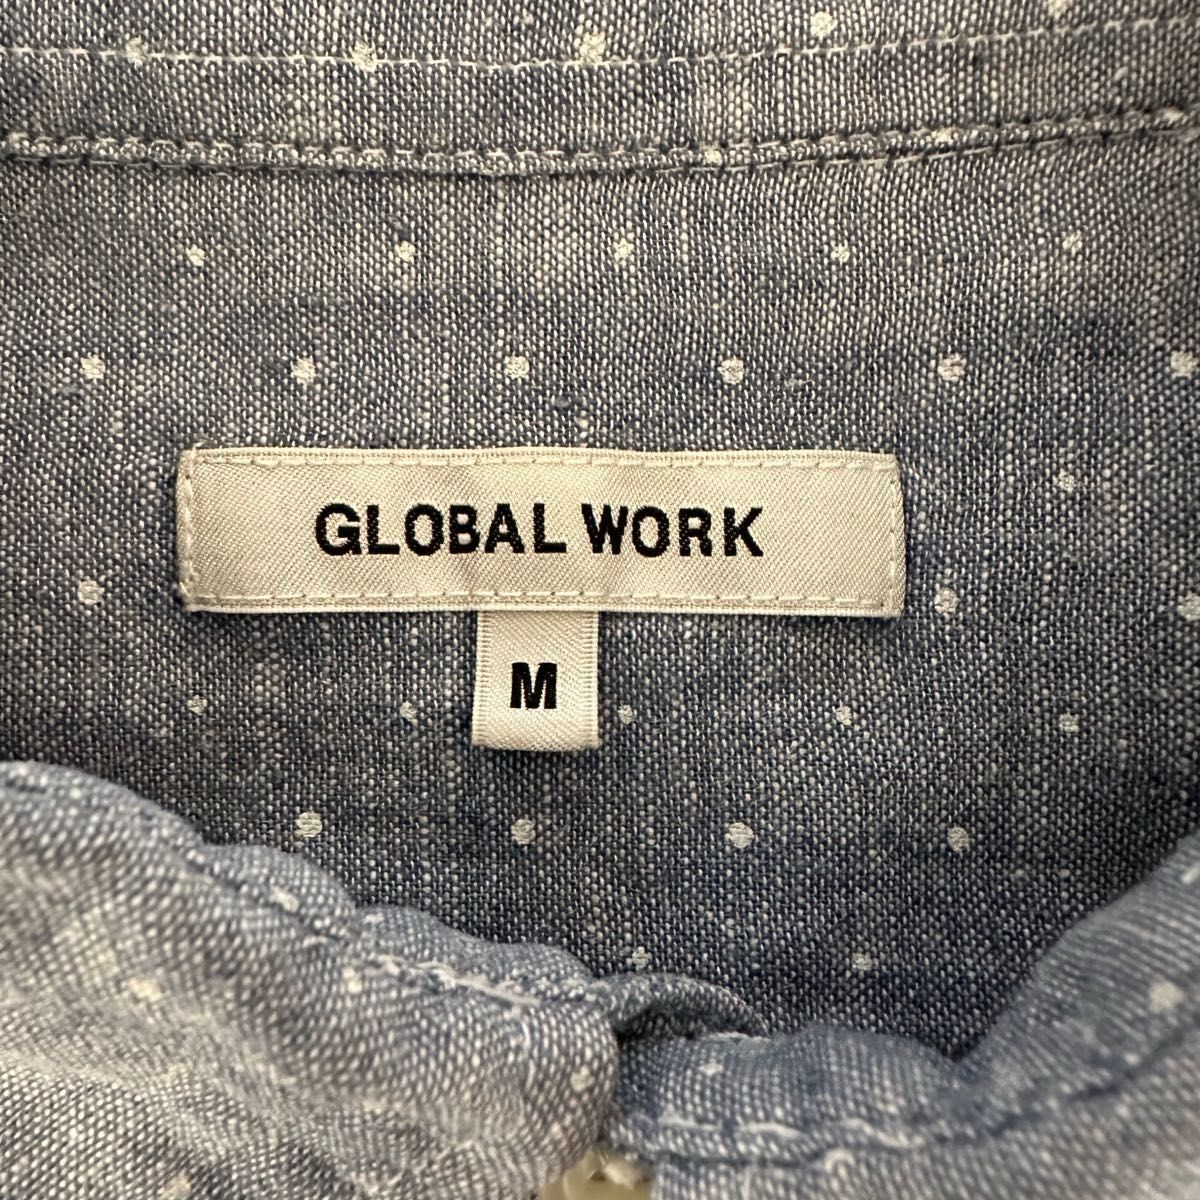 GLOBAL WORK 七分袖 麻混サマーメンズシャツ USED M